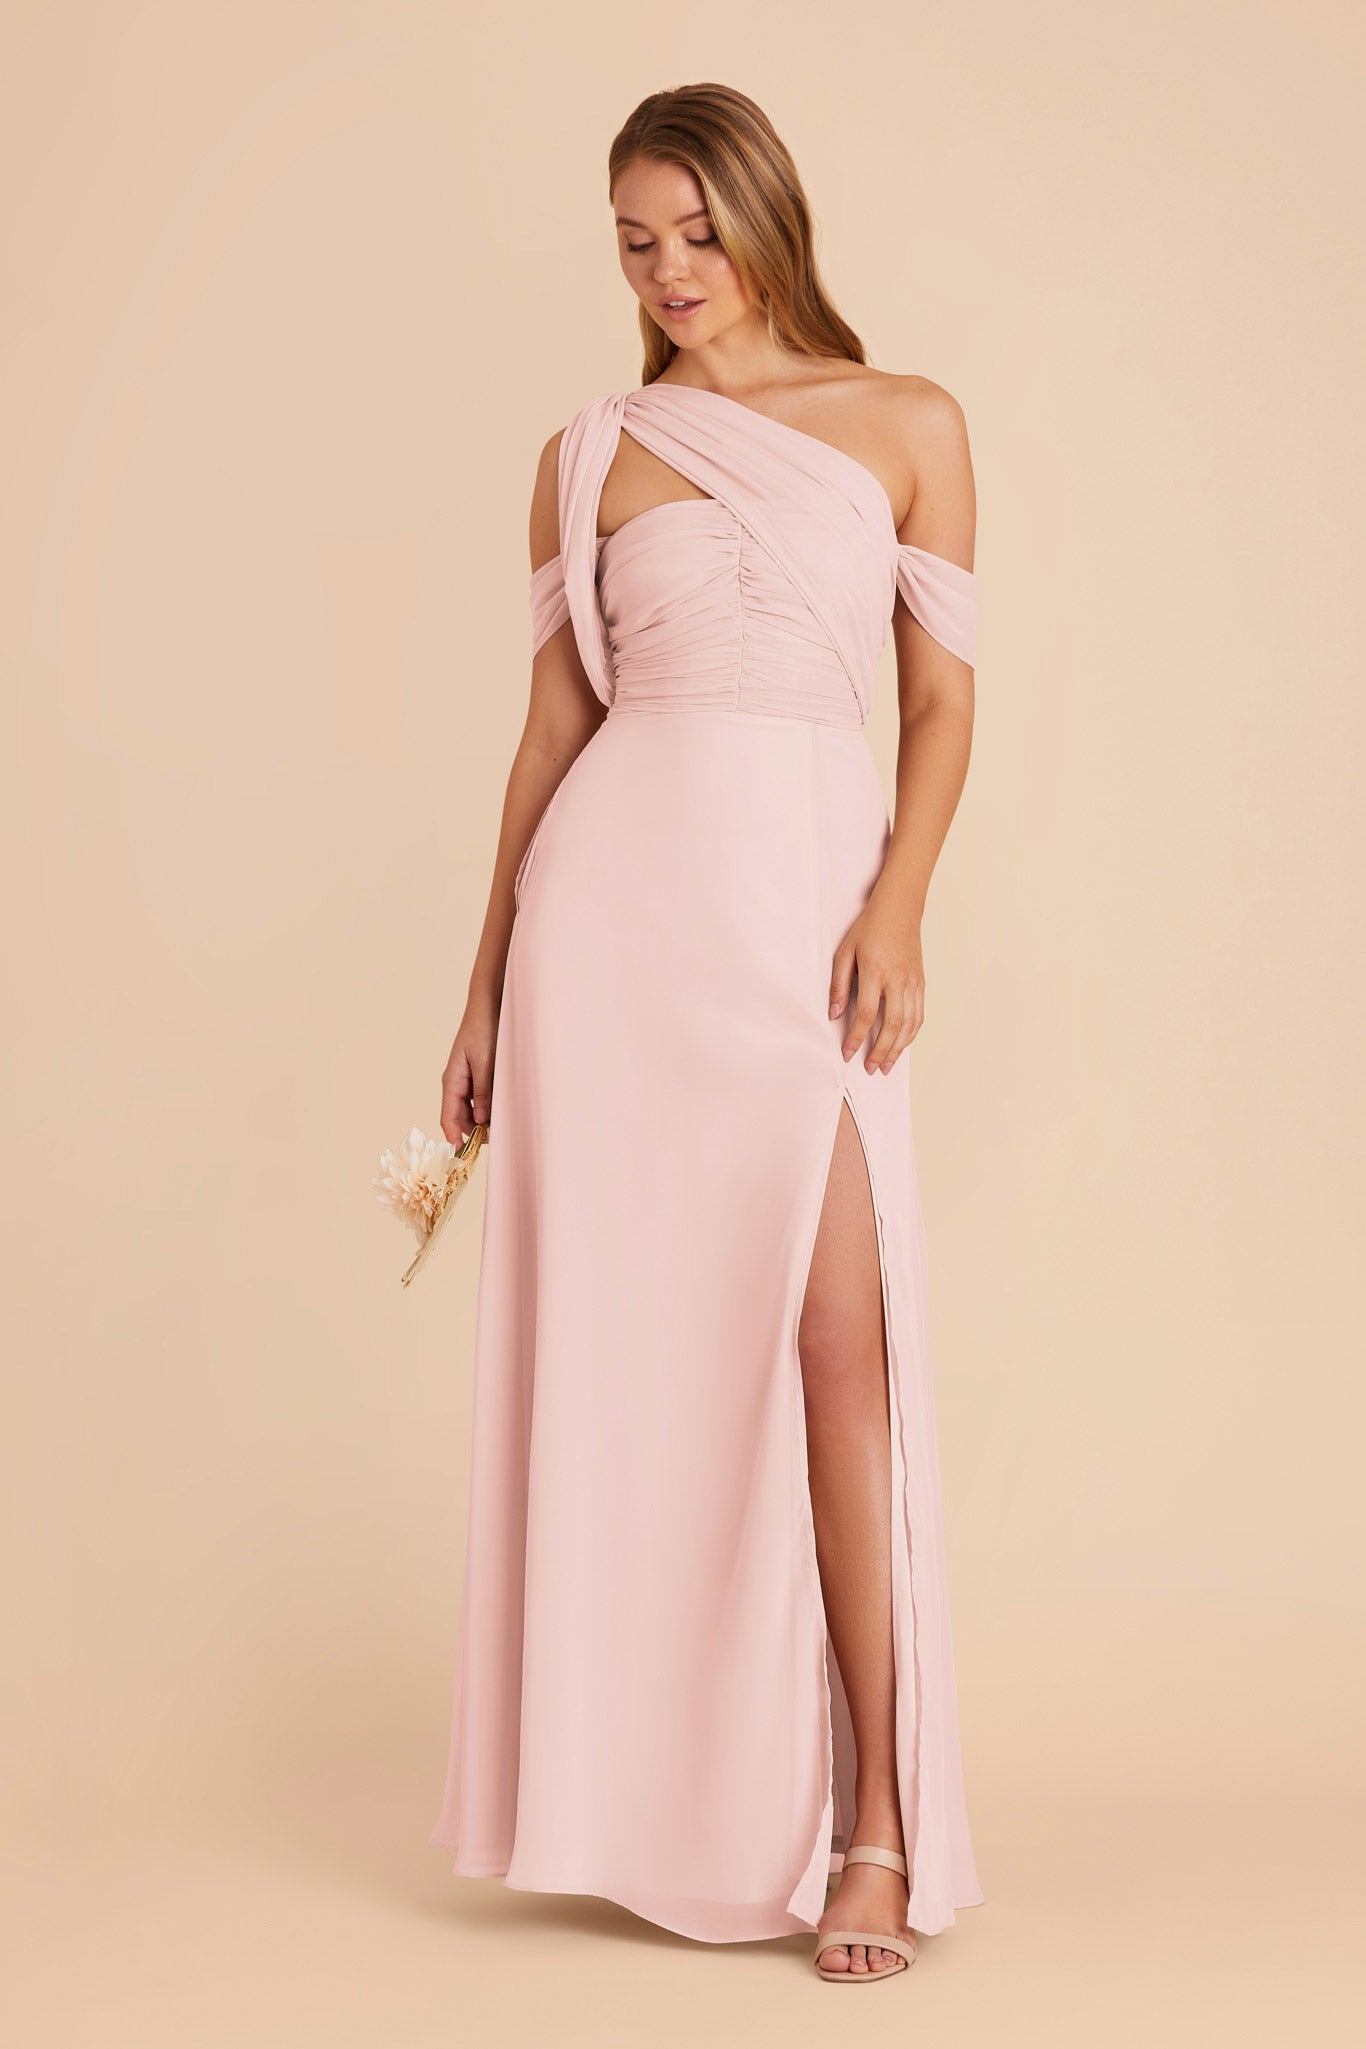 Blush Pink Cara Chiffon Dress by Birdy Grey